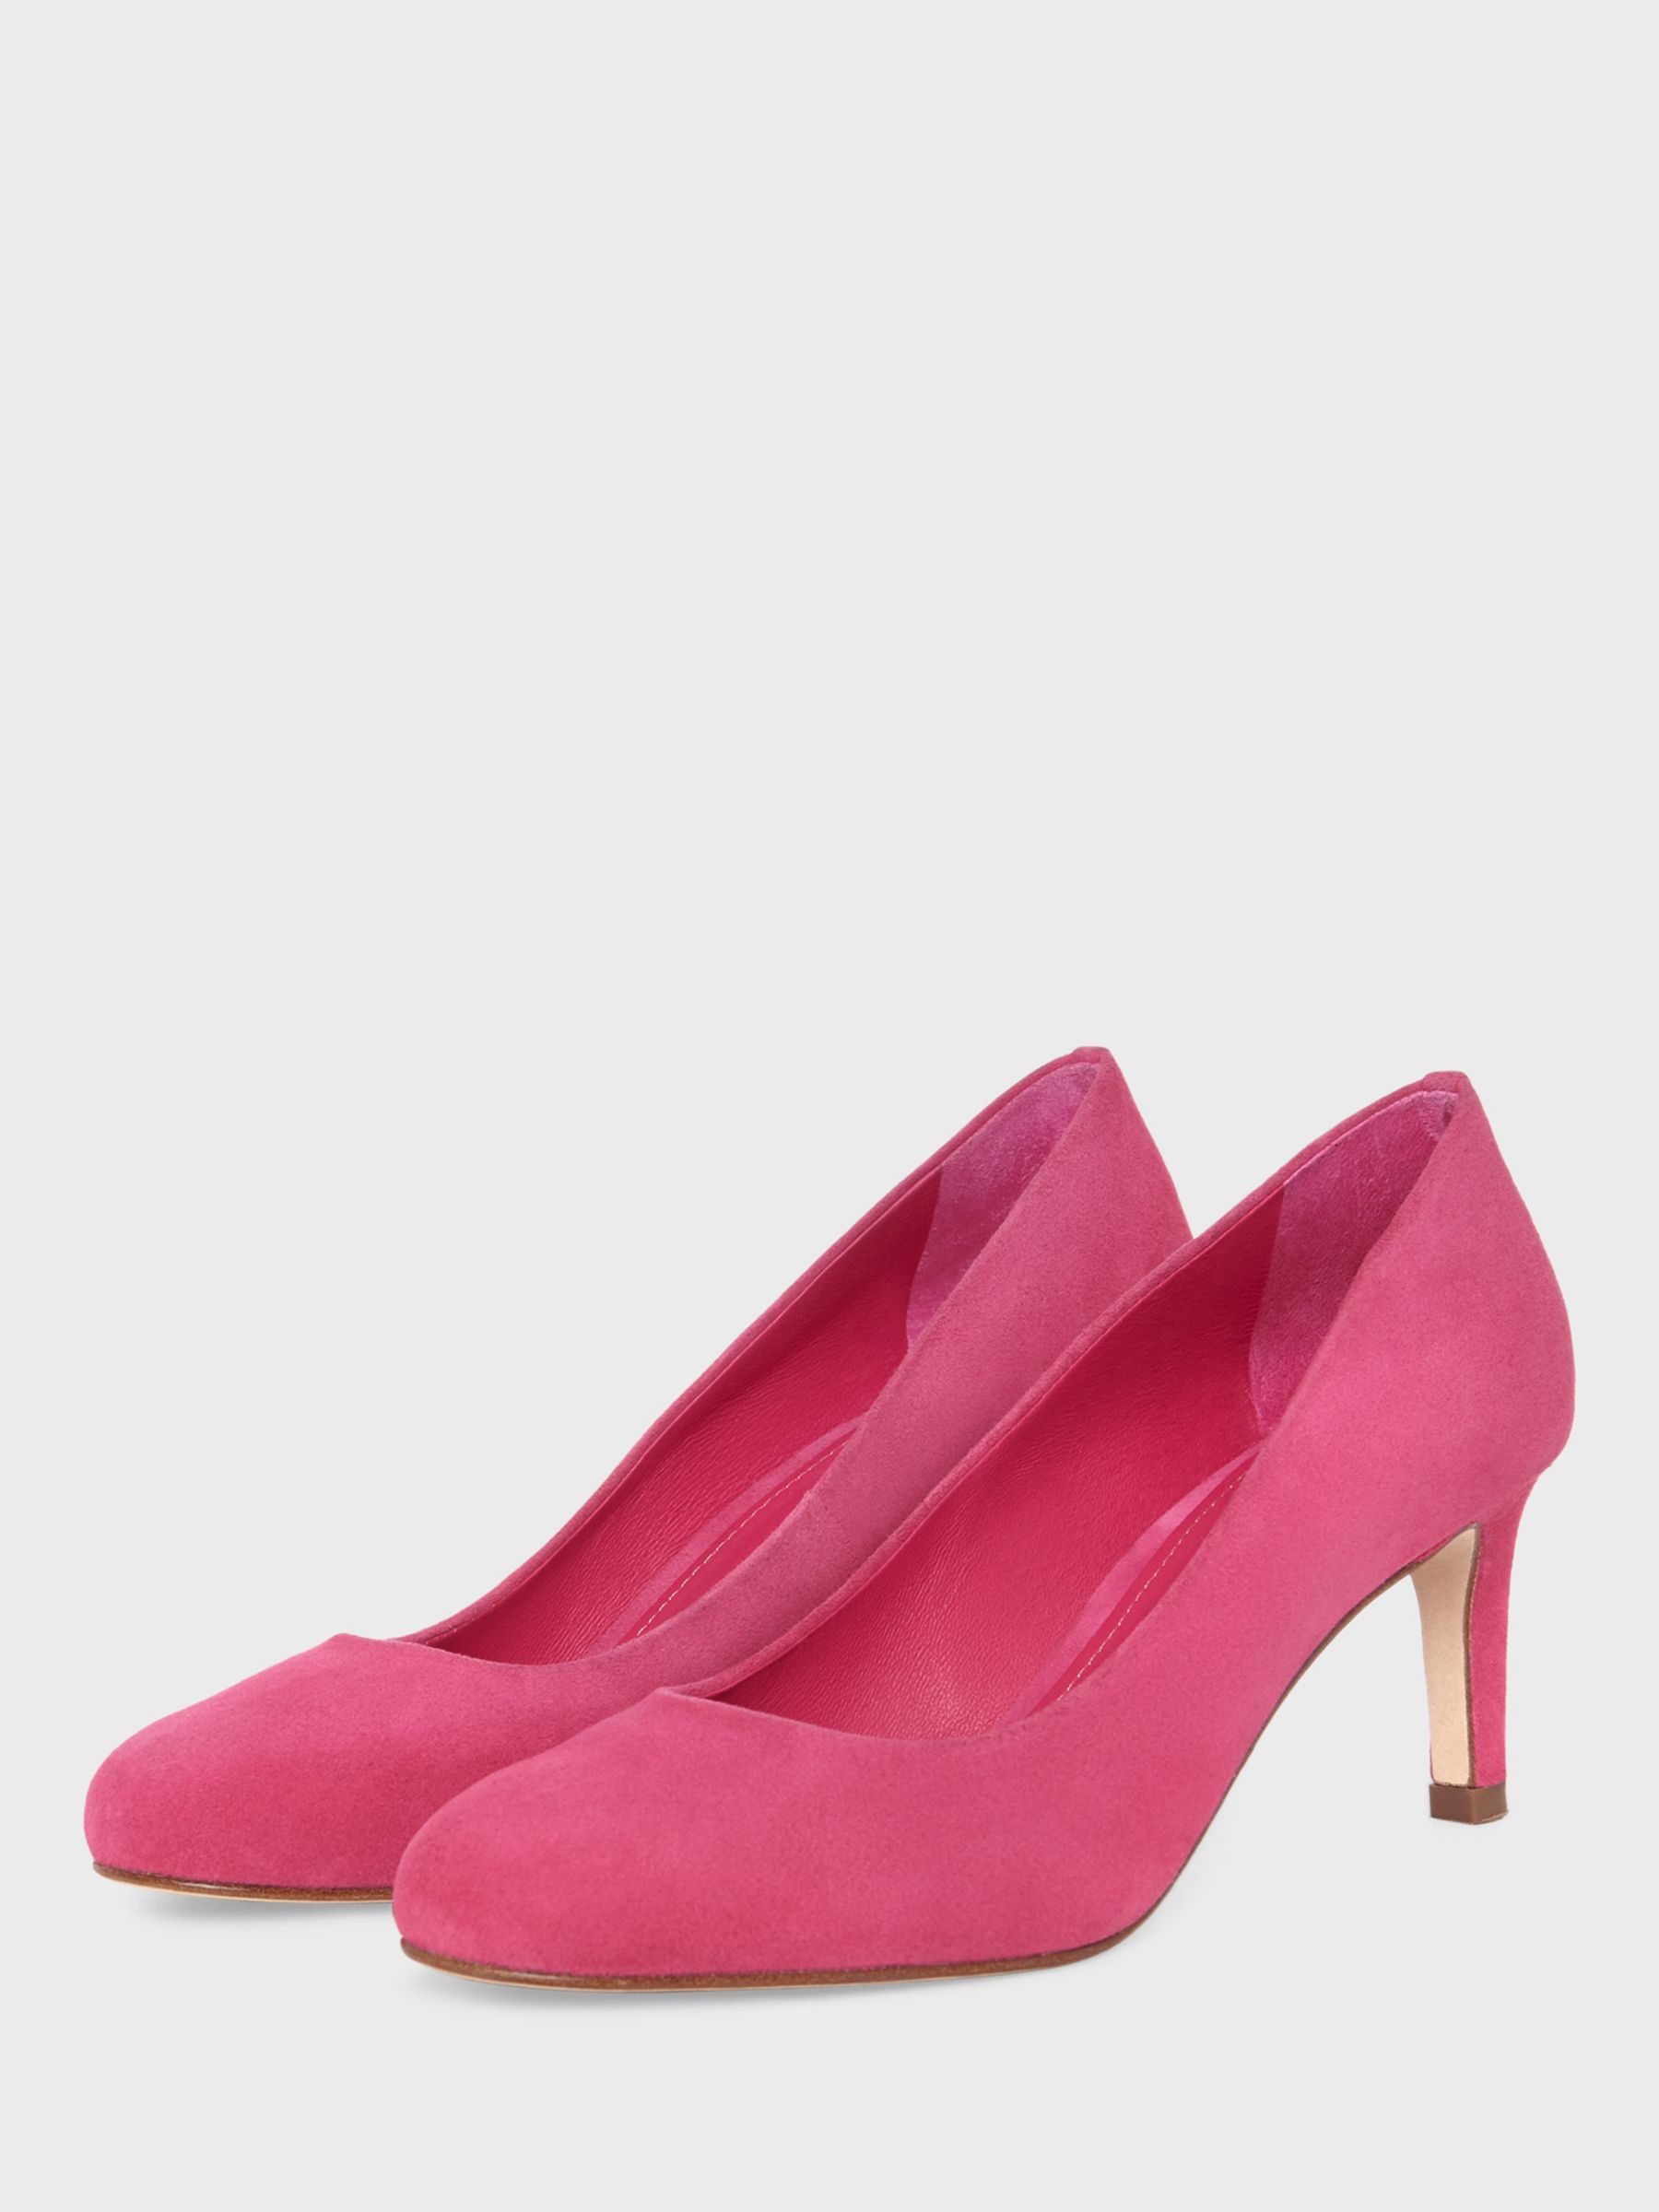 Hobbs Lizzie Suede Stiletto Heel Court Shoes, Bright Pink at John Lewis ...